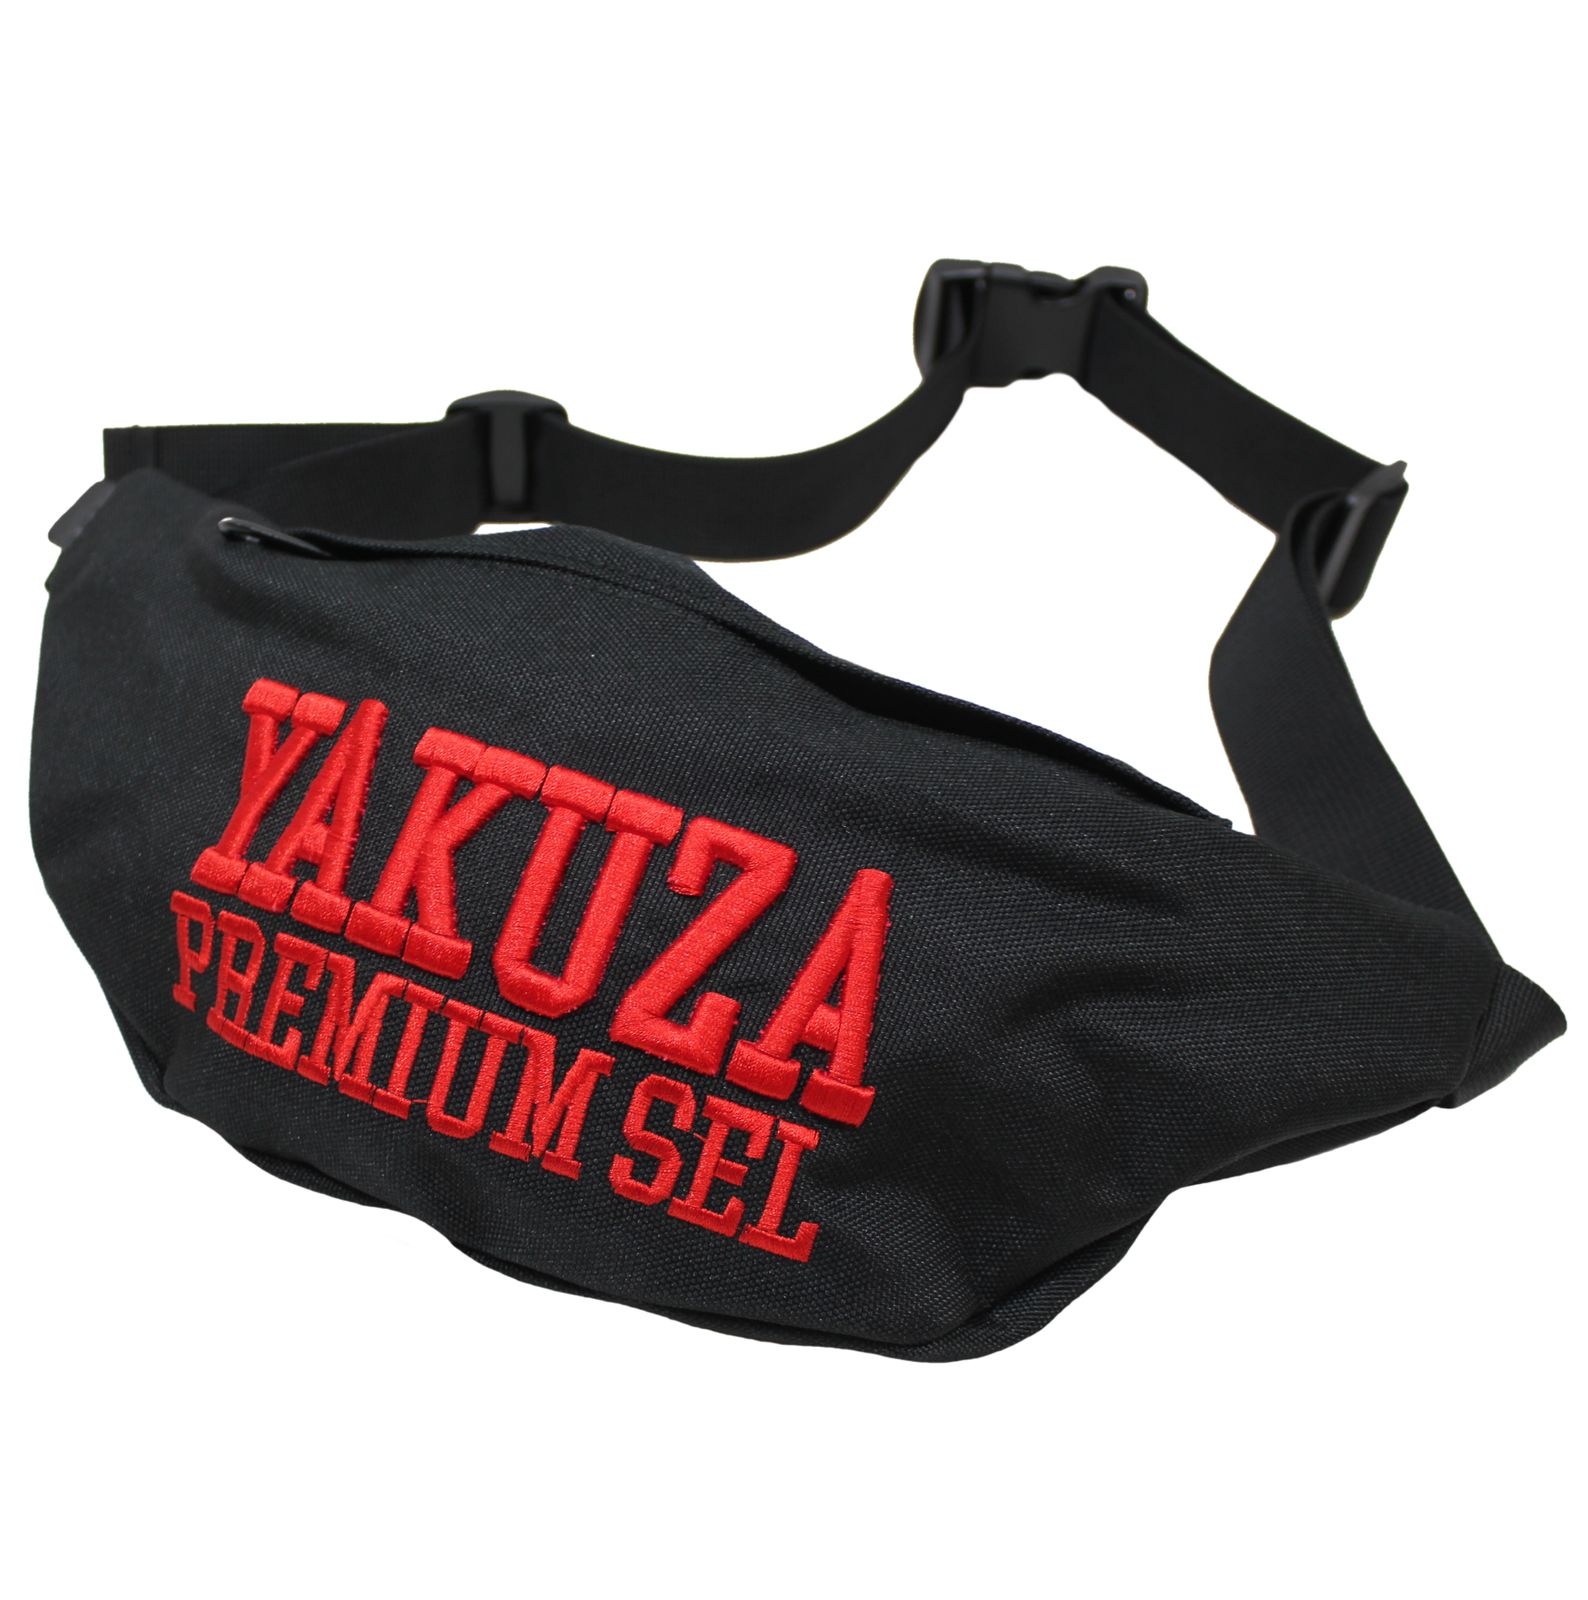 Yakuza Premium ledvinka - taštička přes rameno 3575 černo červená Velikost: one size